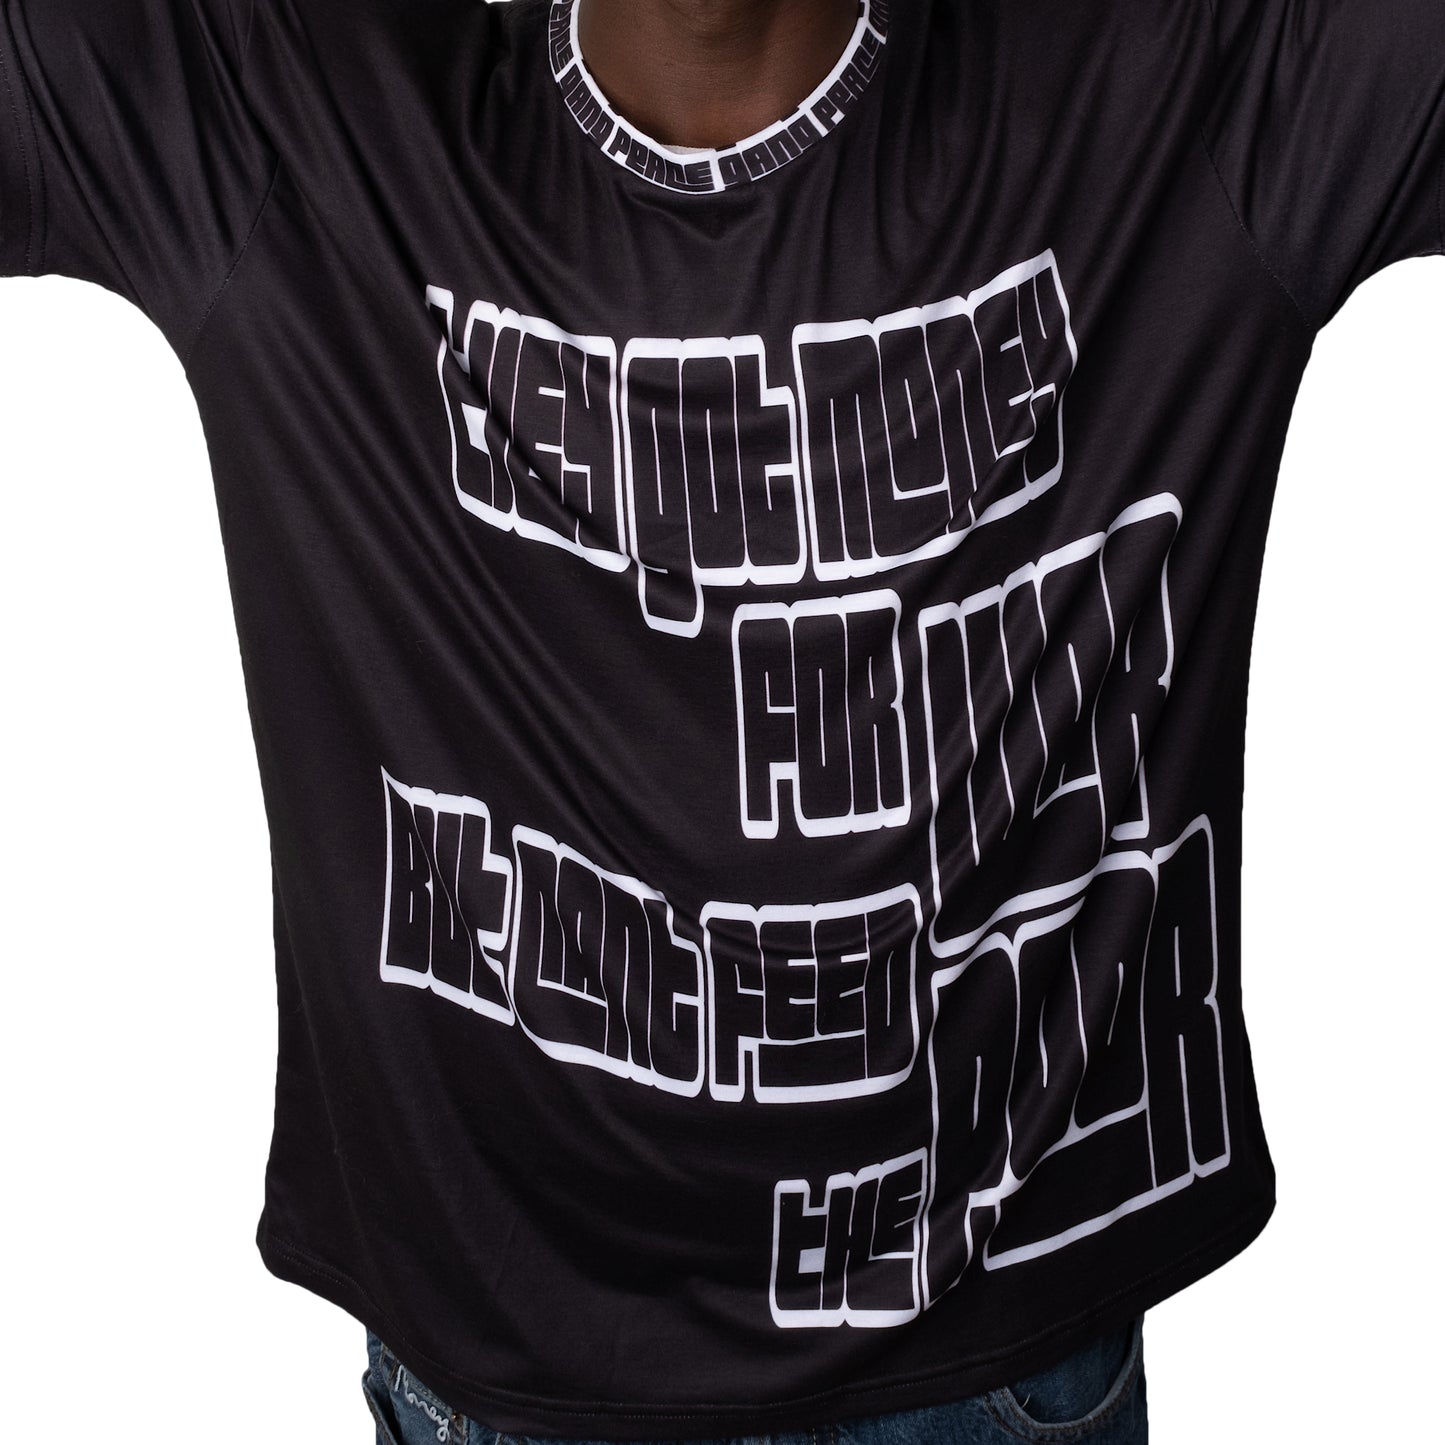 Unisex Black T-Shirt" Money For War "  - PEACE GANG